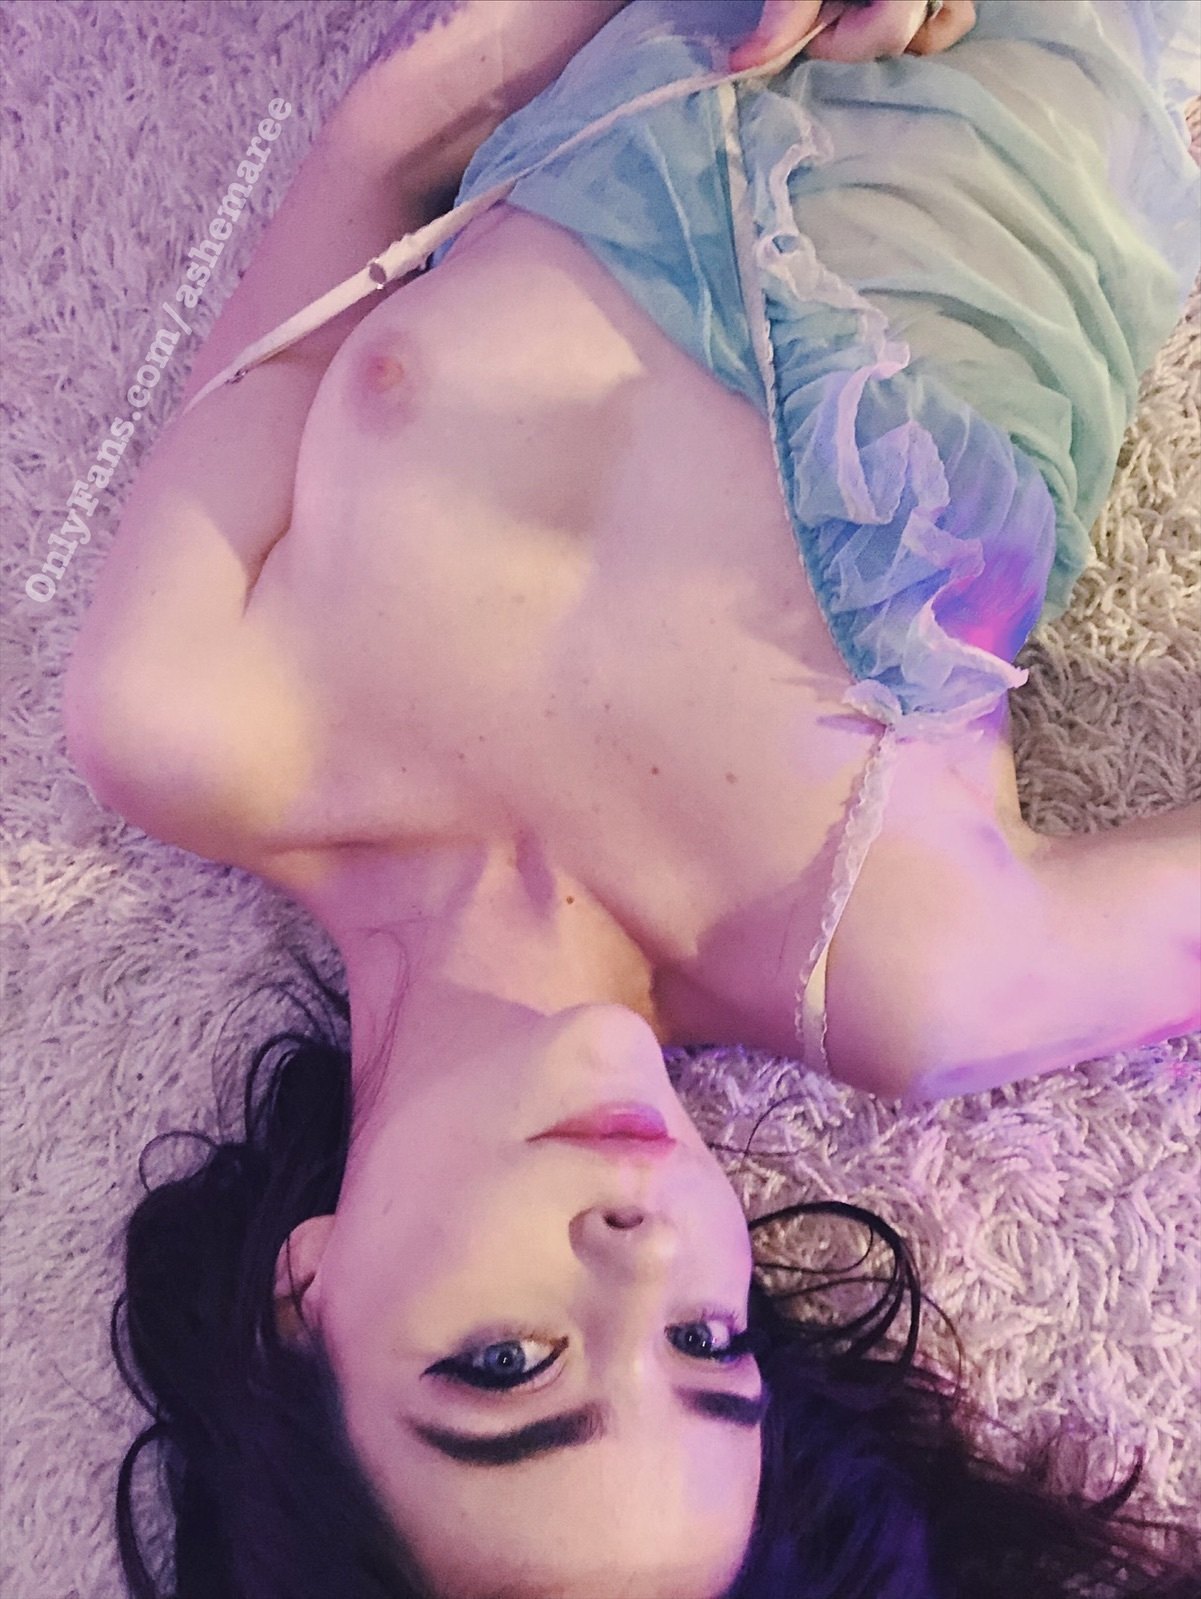 Ashe-Maree-Porn-Model-Эротика-маленькая-грудь-5812424.jpeg